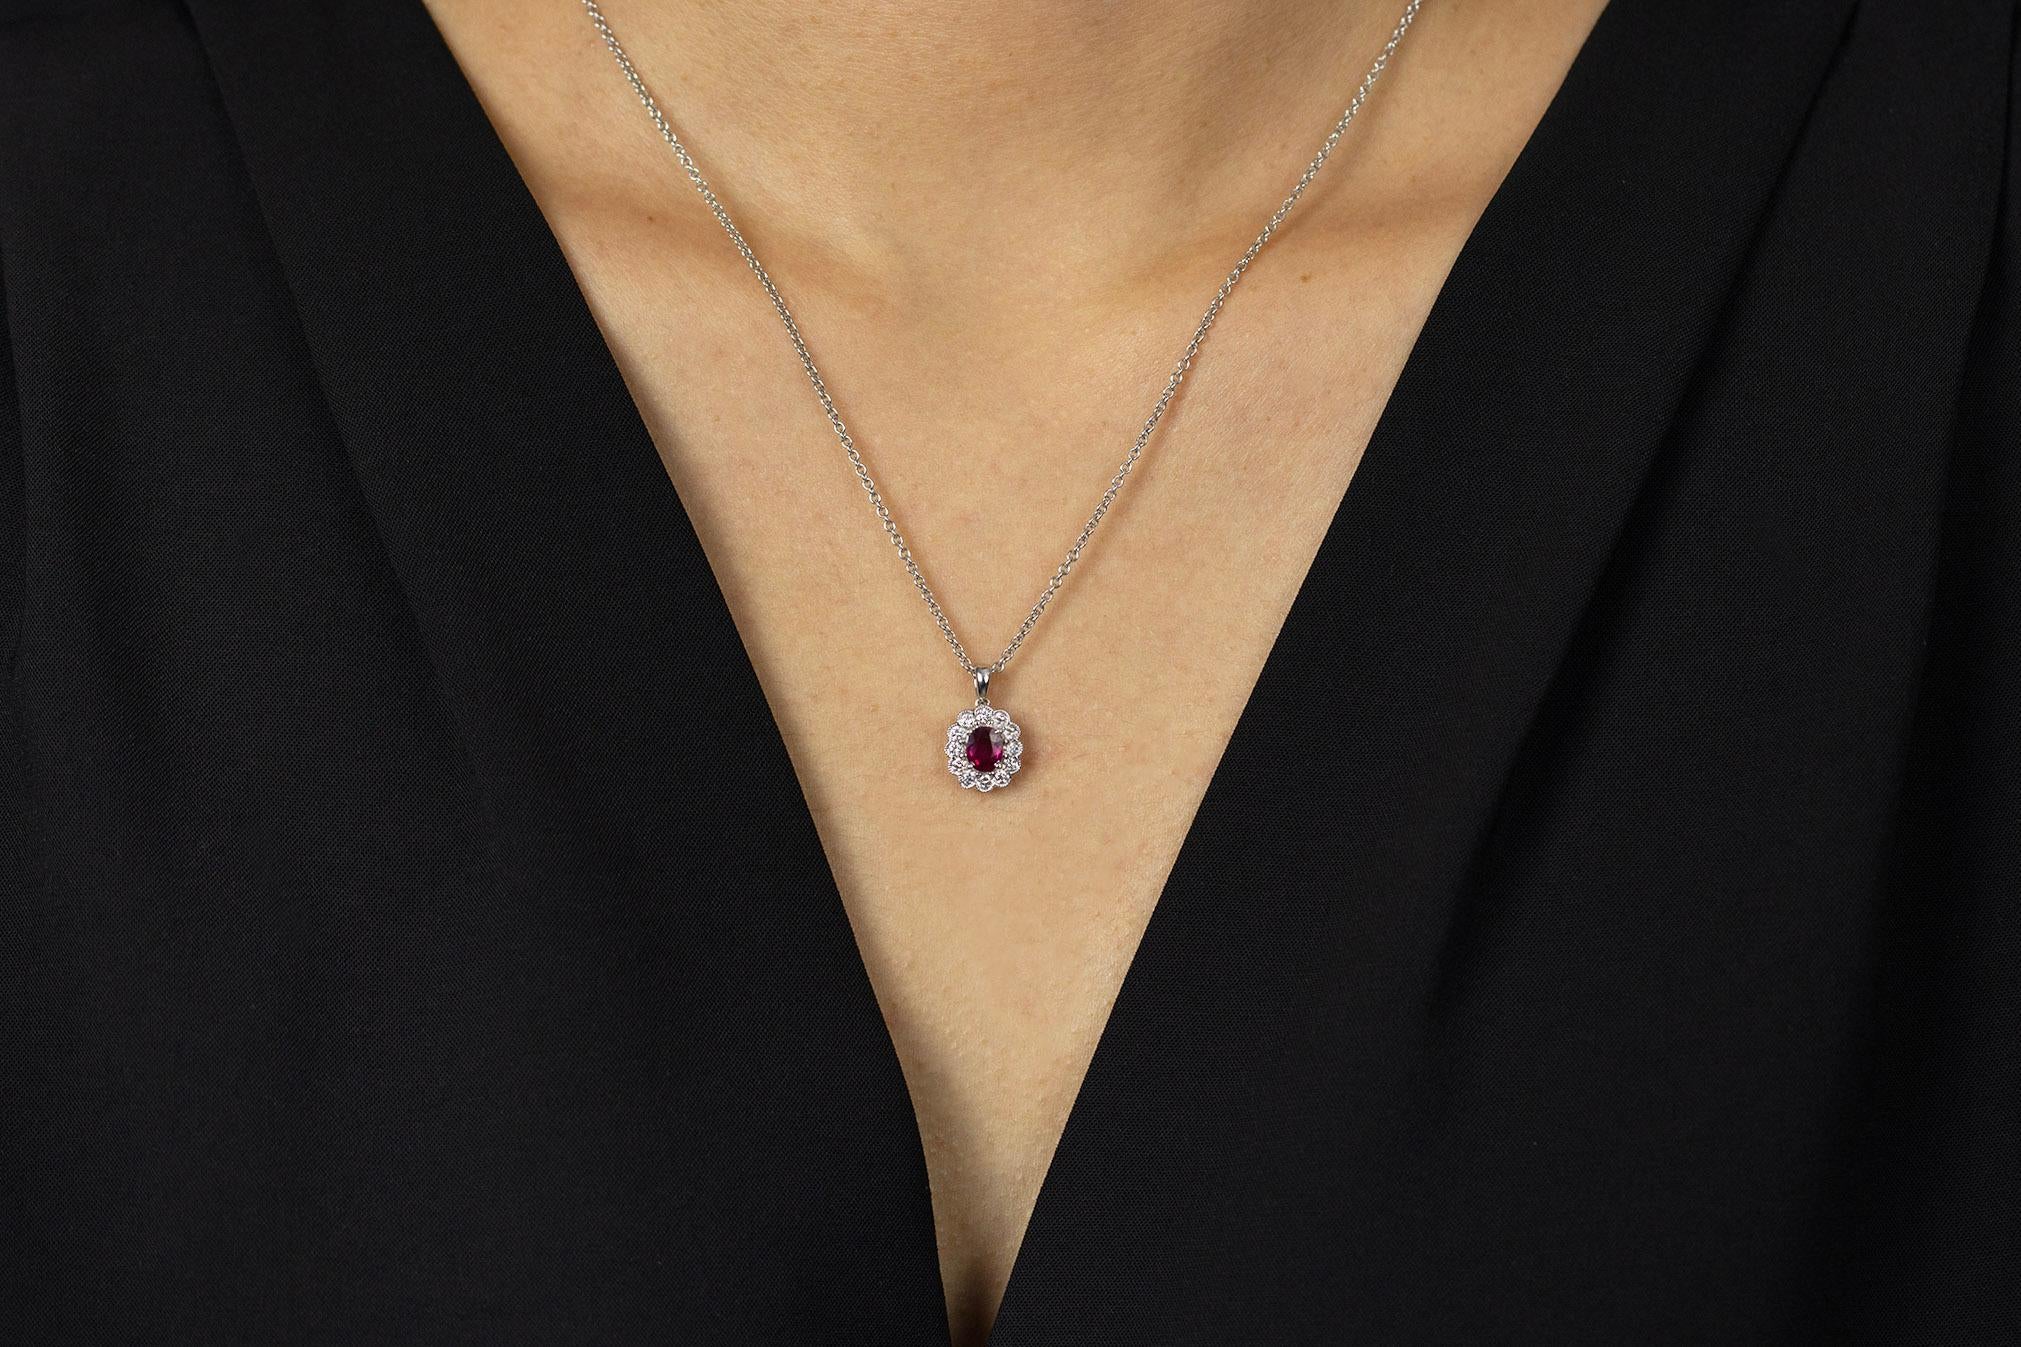 Contemporary Roman Malakov 0.65 Carat Oval Cut Ruby with Diamond Halo Pendant Necklace For Sale